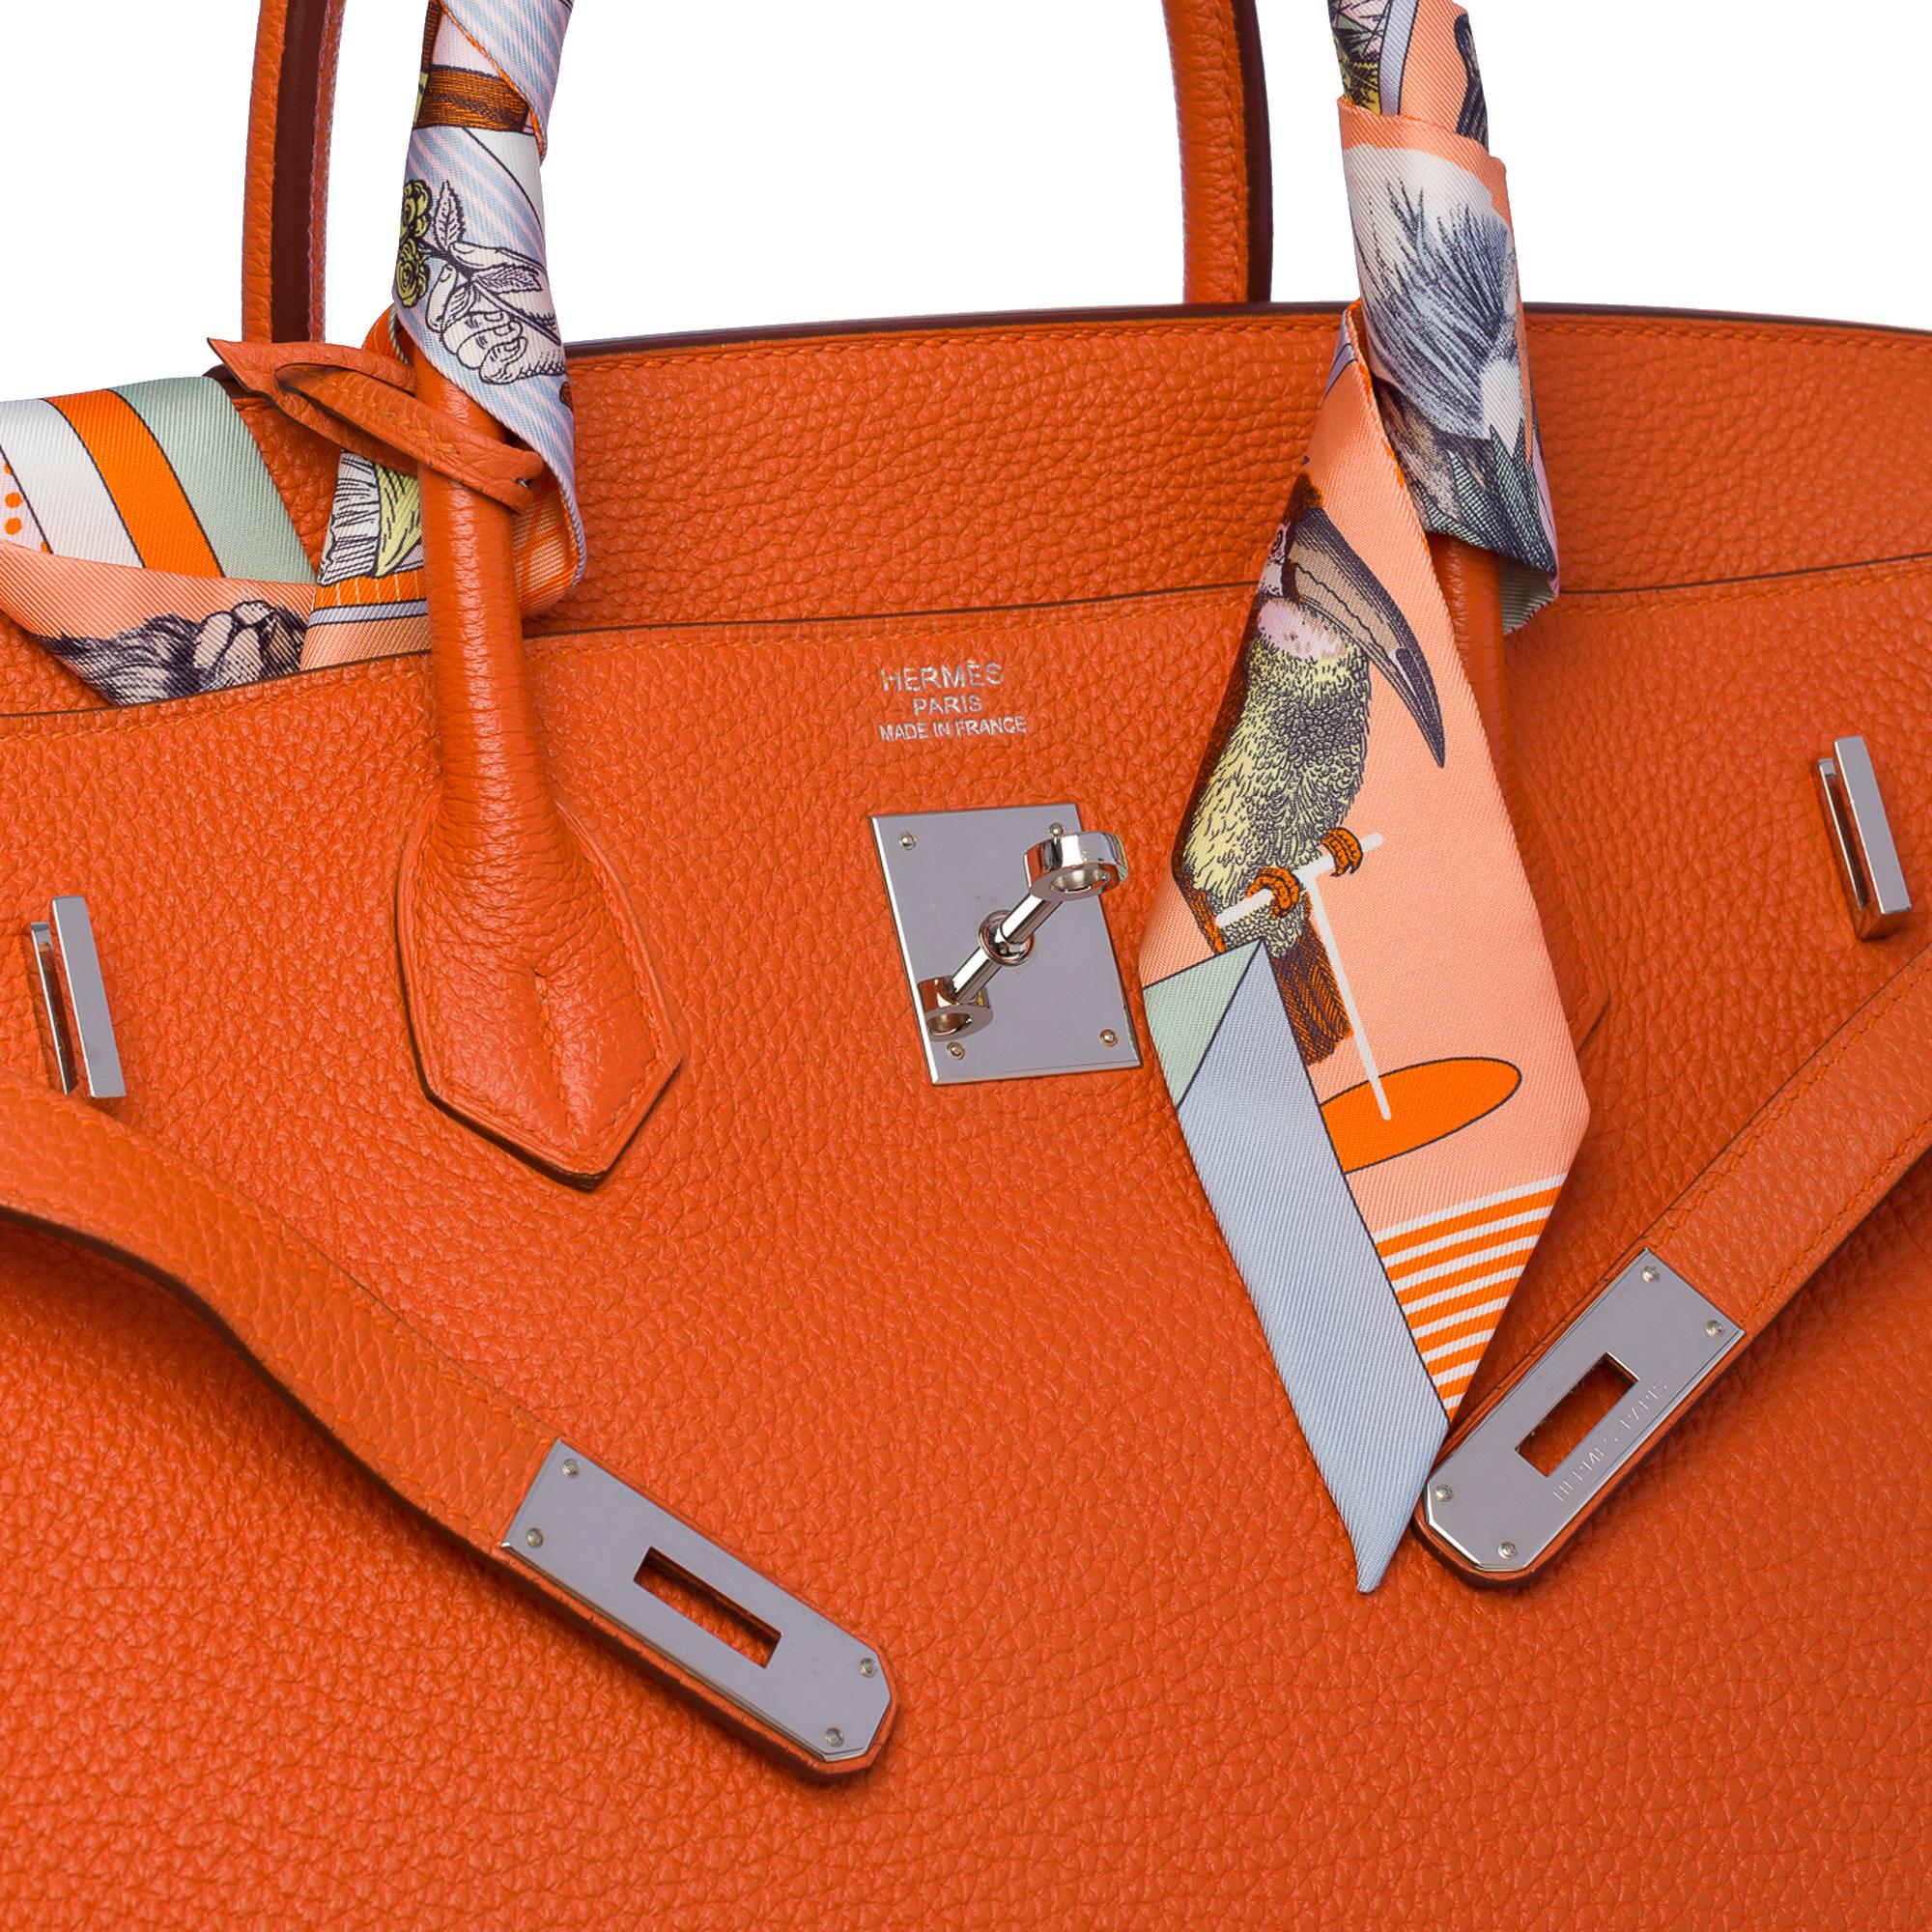 Stunning Hermes Birkin 40cm handbag in Orange Terre battue Togo leather, SHW 2